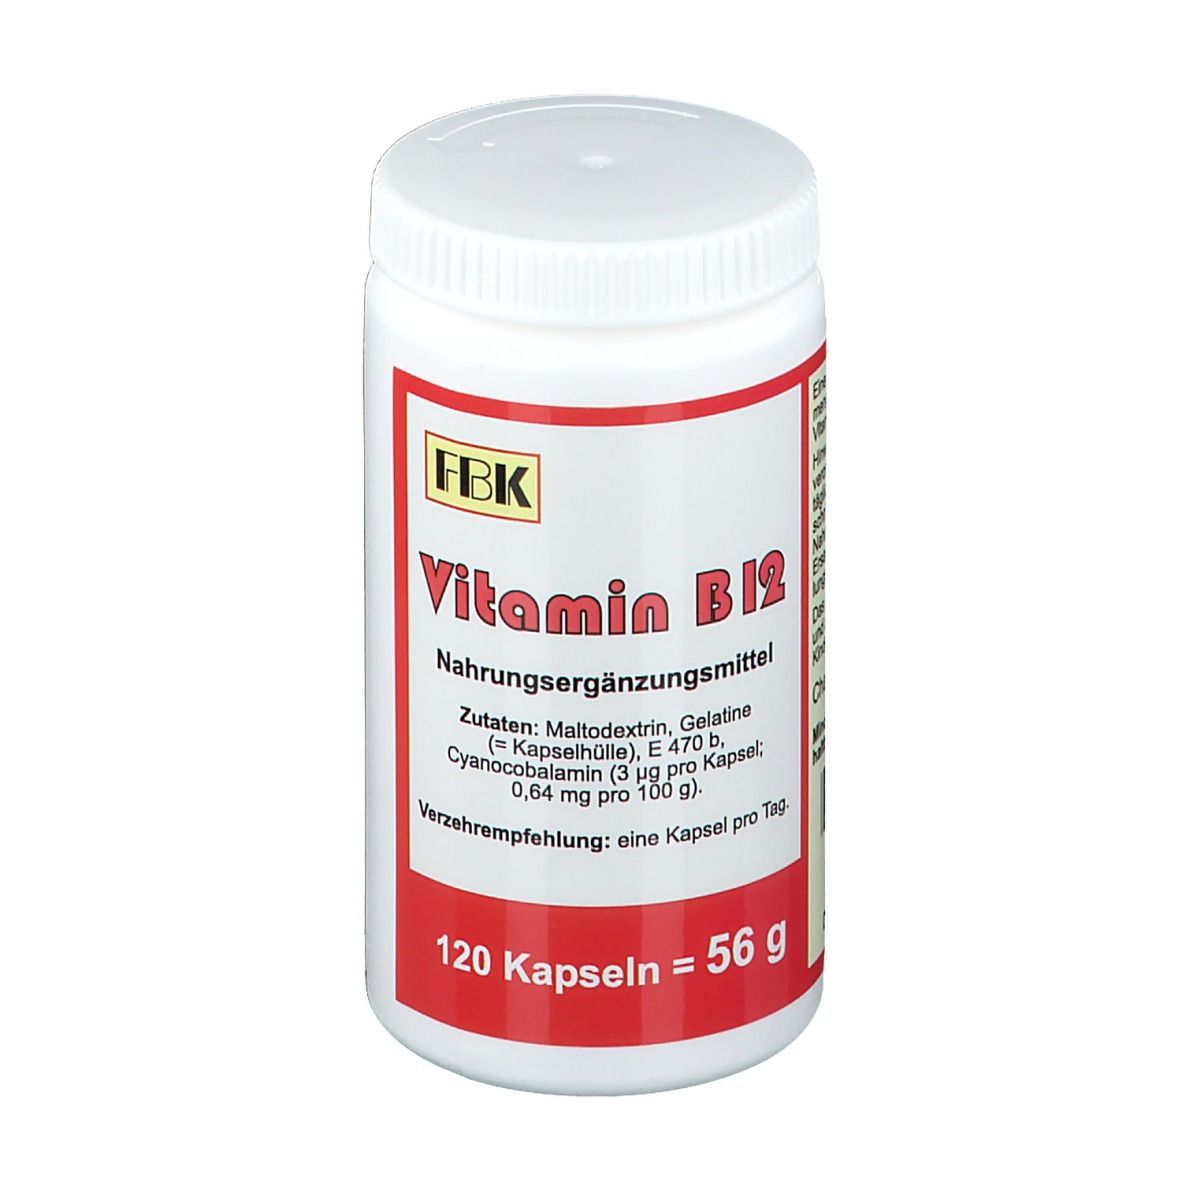 Image of Vitamin B12